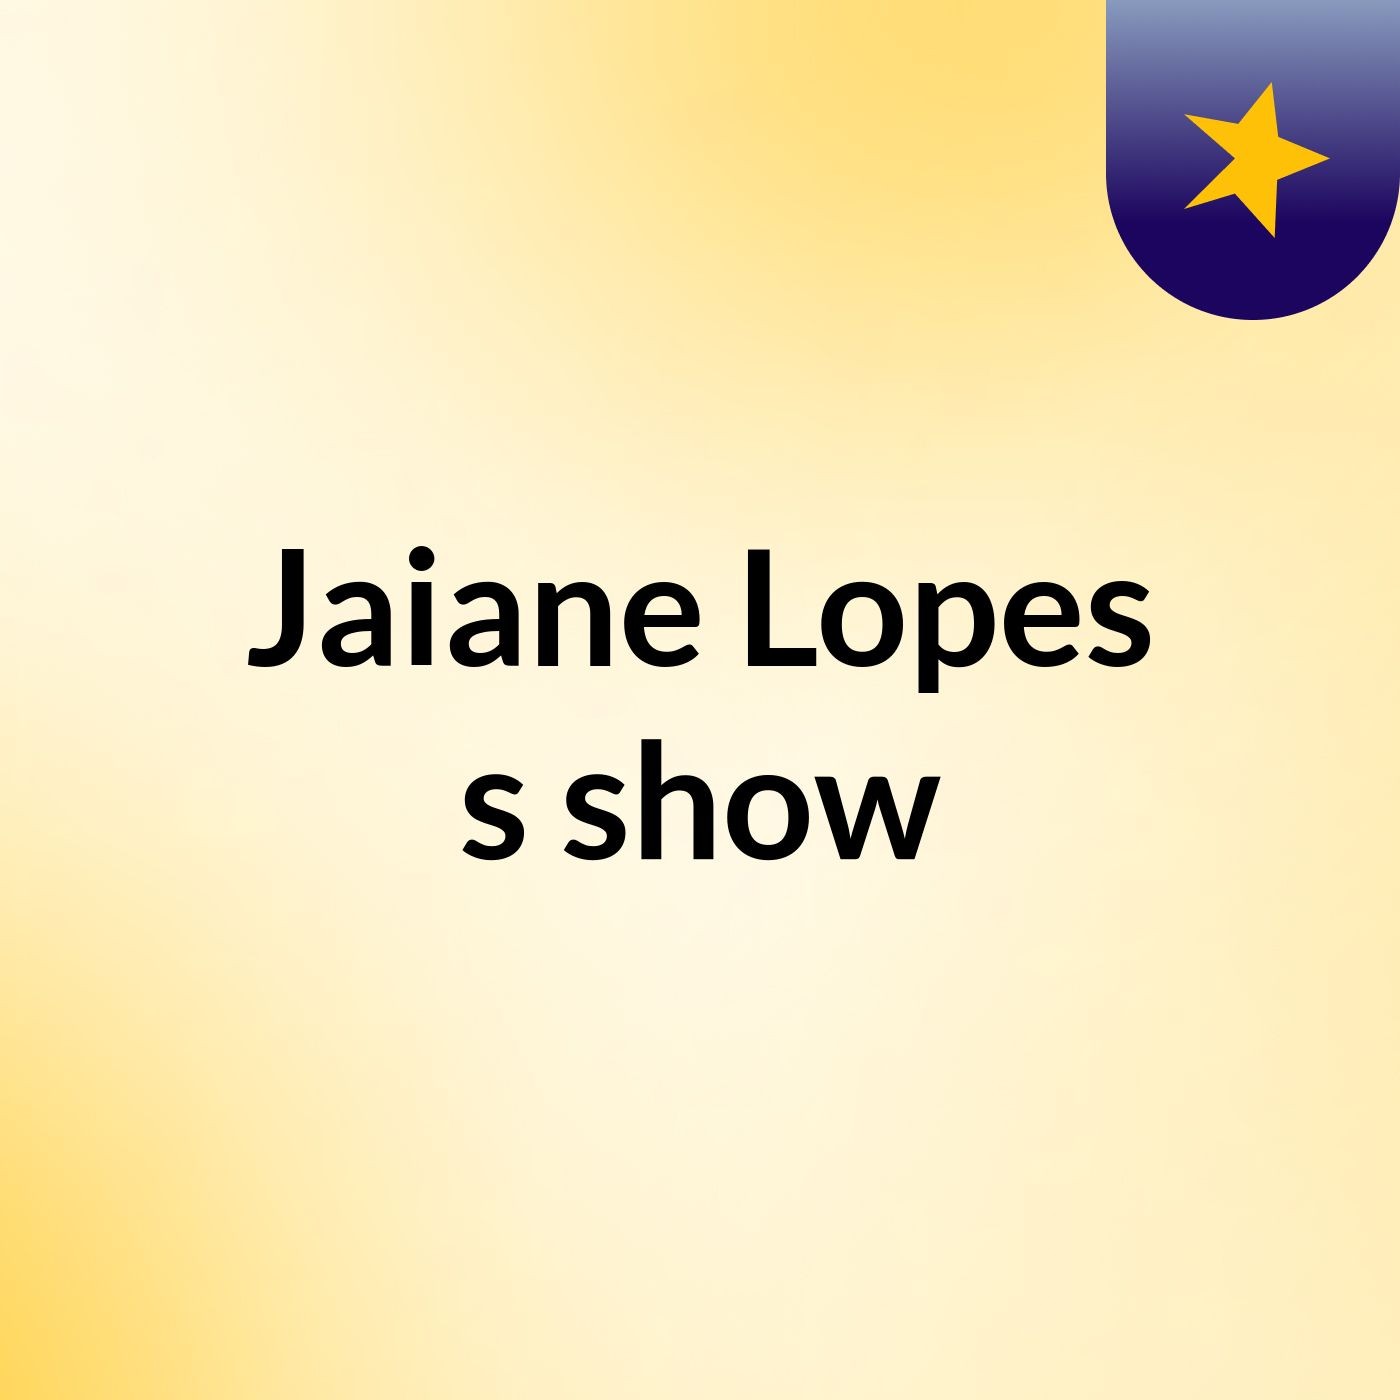 Jaiane Lopes's show